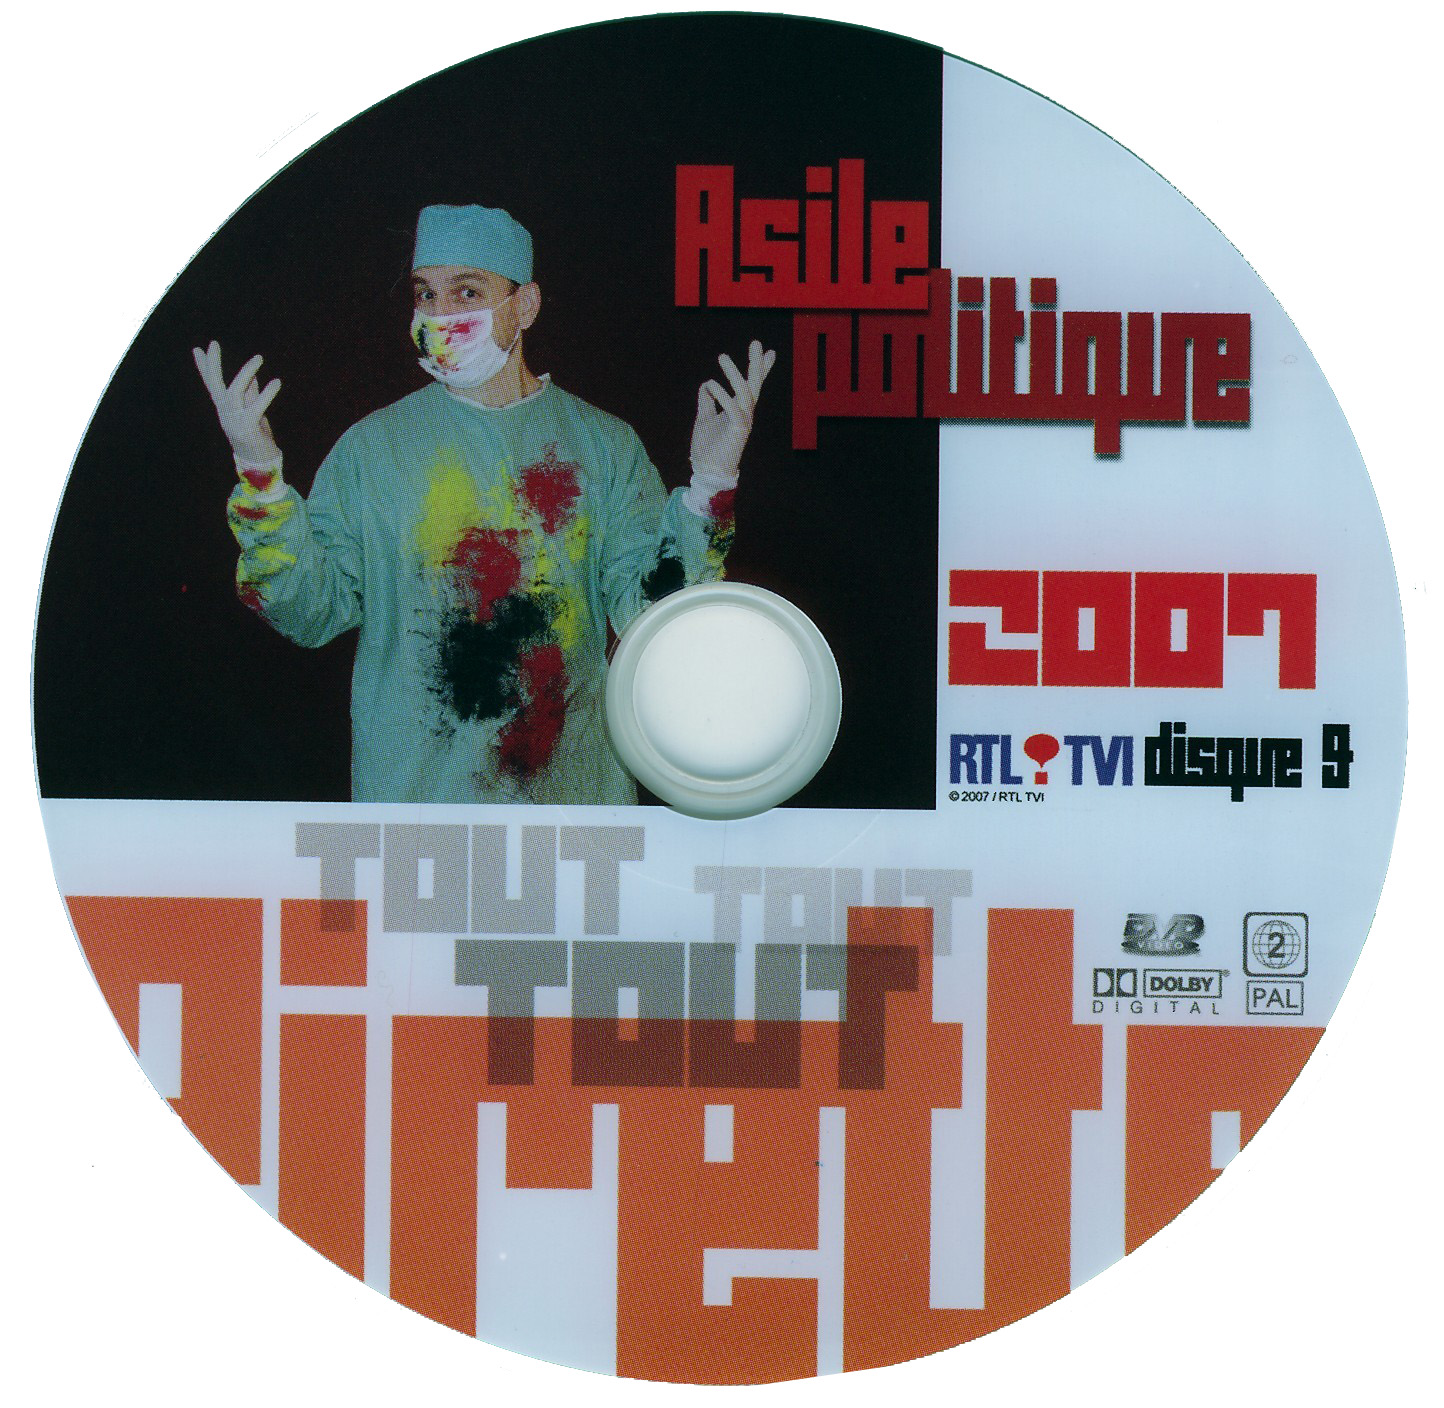 Pirette - Intgrale DISC 09 Asile Politique